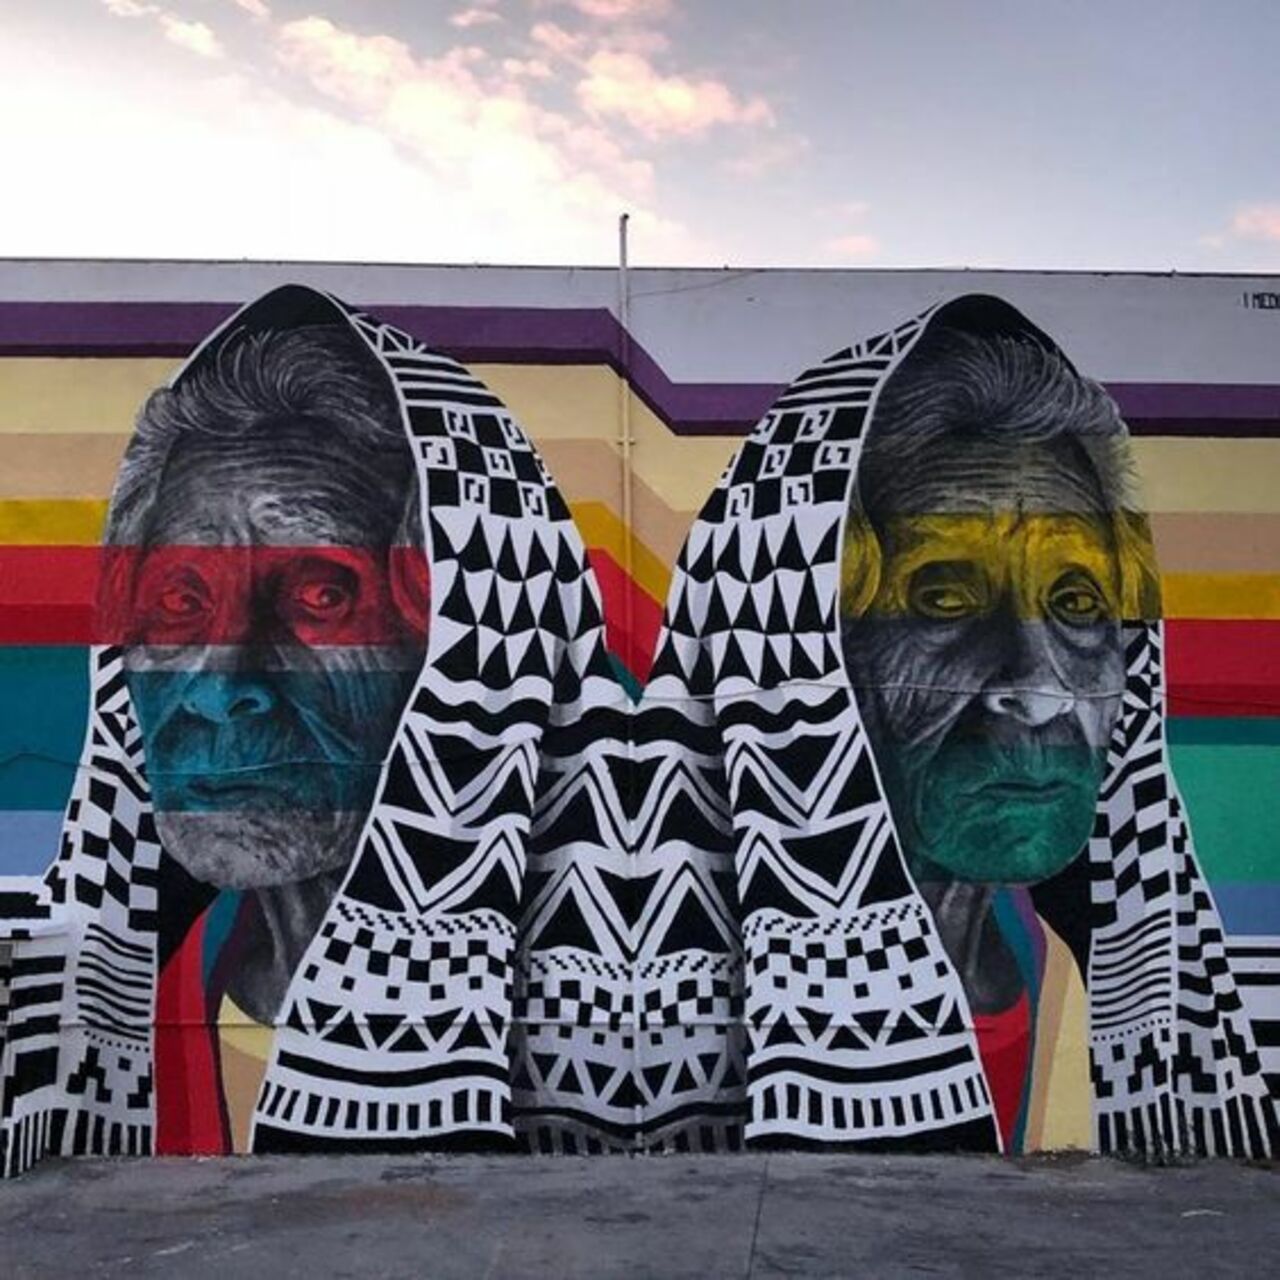 ... and wrinkles that tell stories. Art by Medianeras in Ciudad de San Juan, Argentina #StreetArt #Art #Wrinkles #Stories #Graffiti #Mural #UrbanArt #CiudadDeSanJuan https://t.co/eQuunbopfO